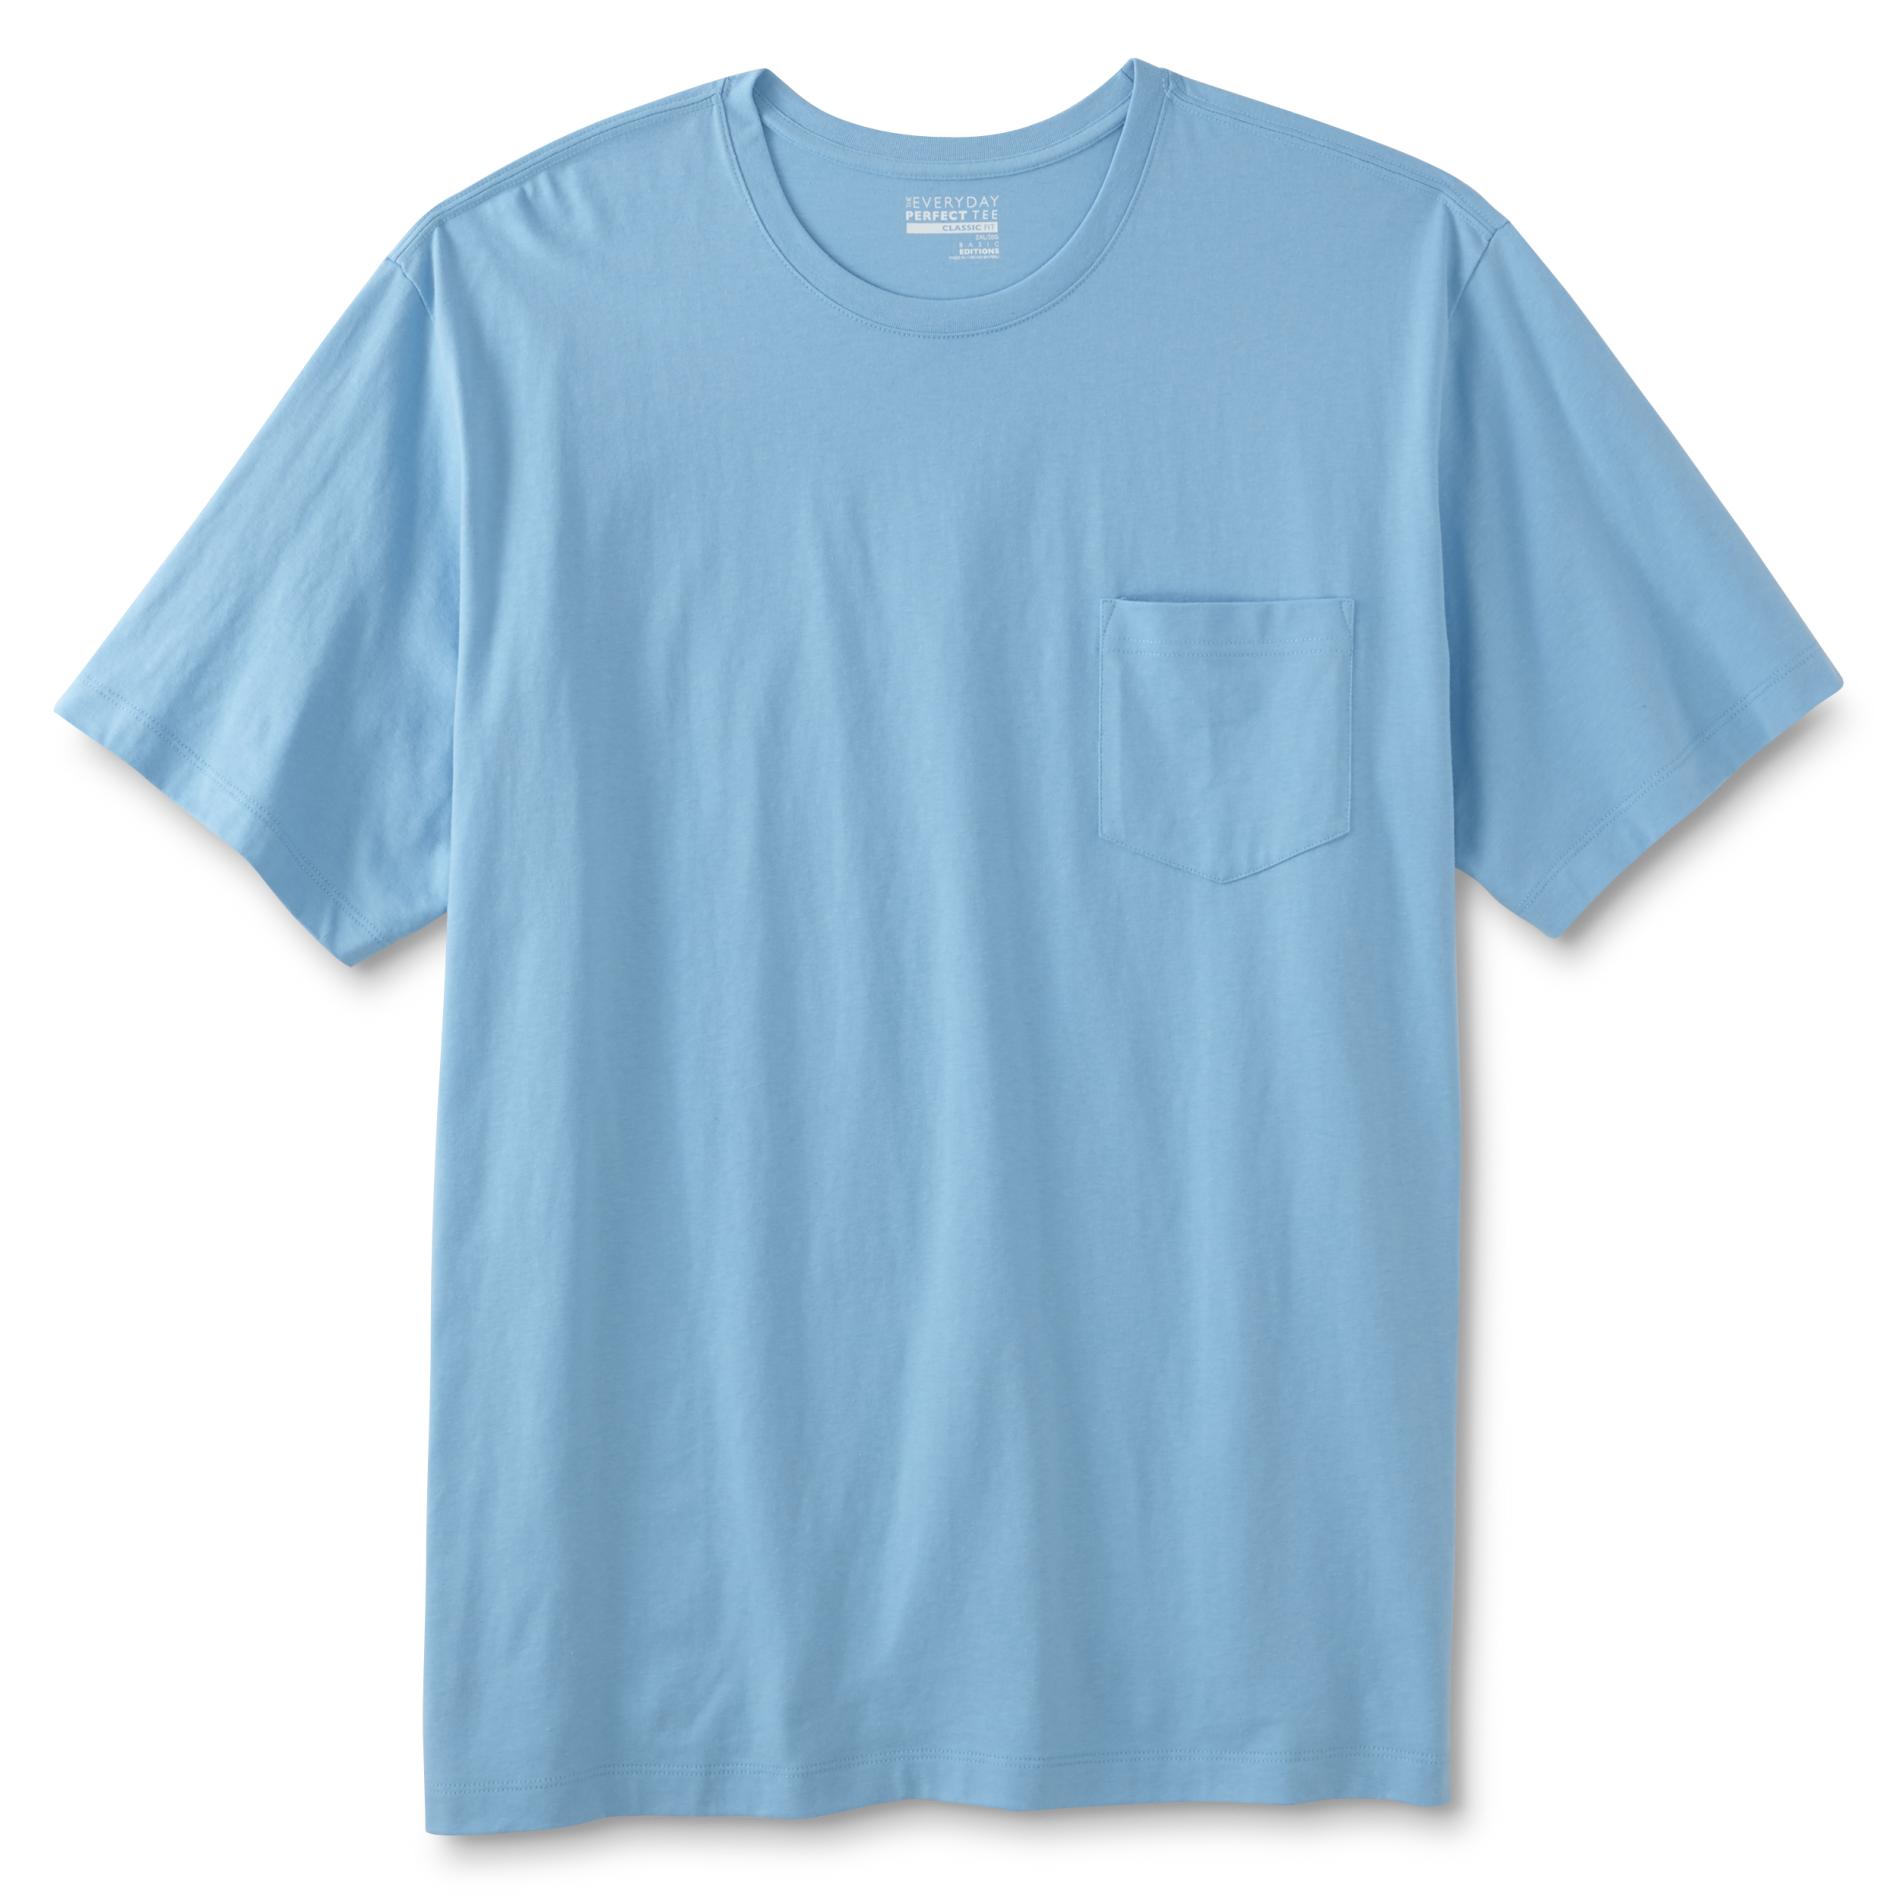 Basic Editions Men's Big & Tall Classic Fit Pocket T-Shirt